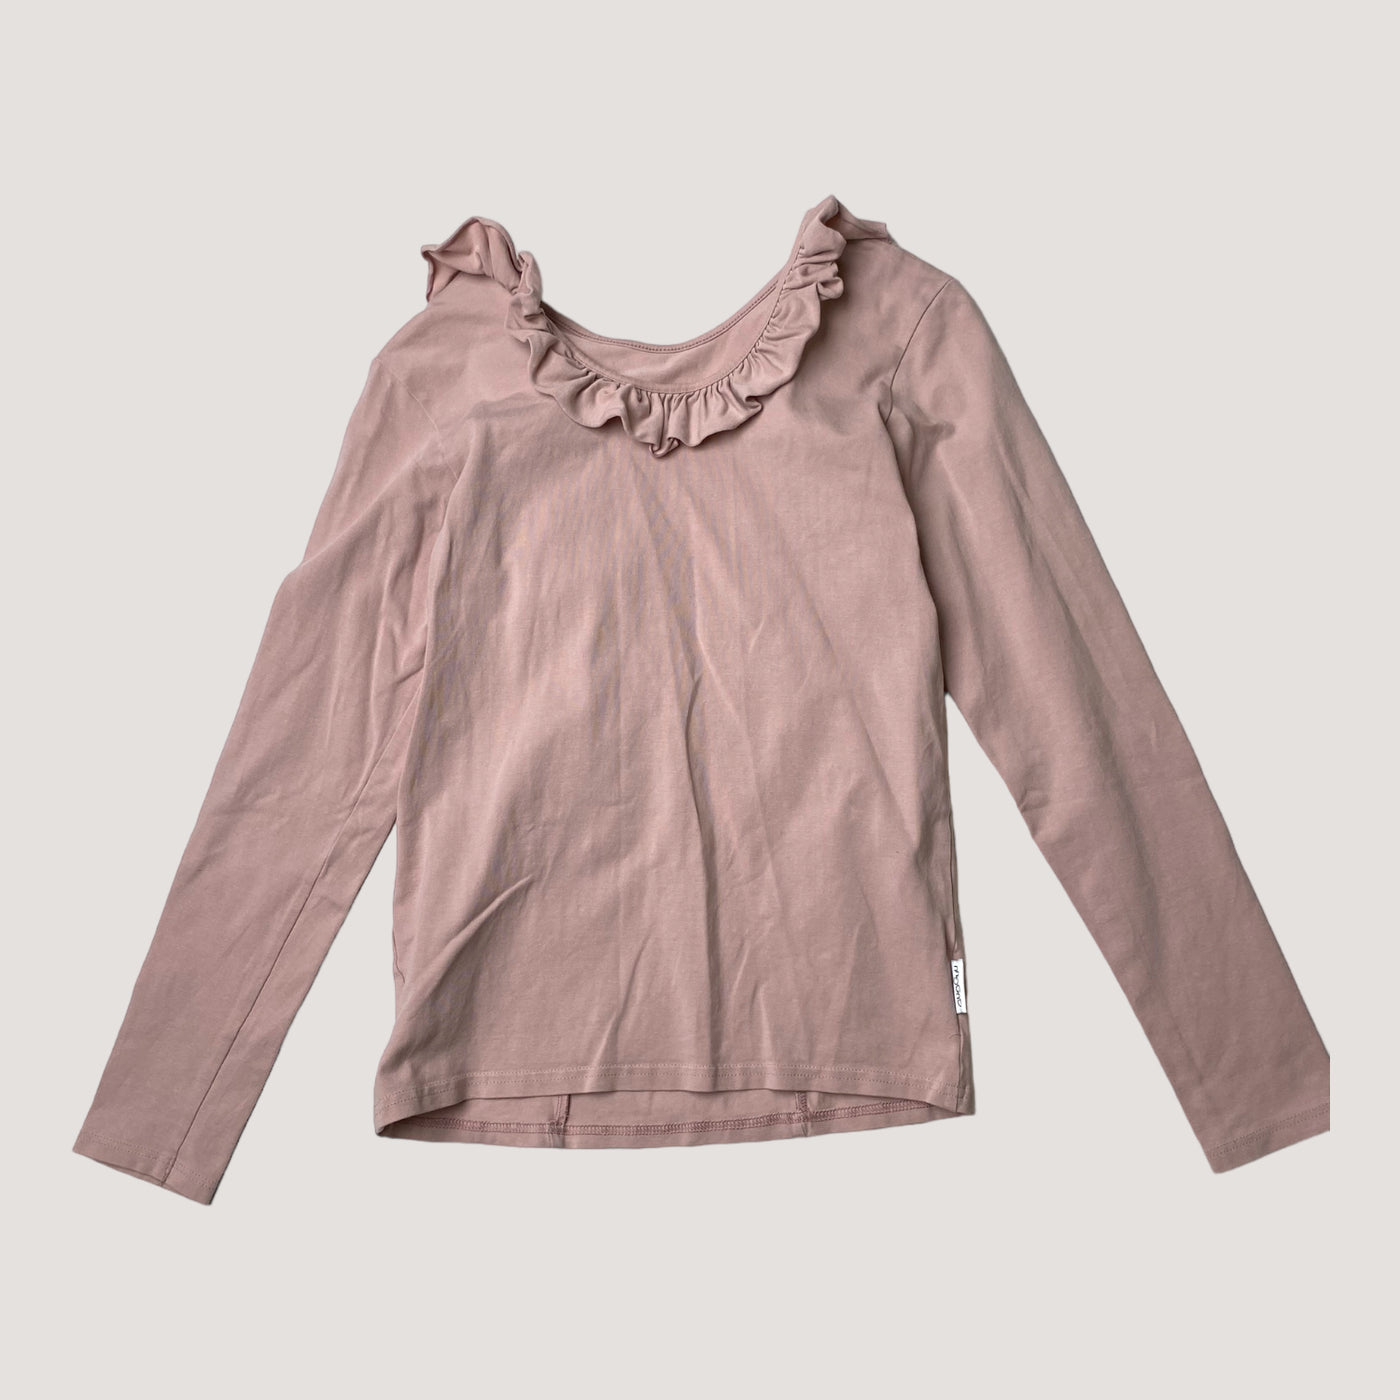 Gugguu frill shirt, pink | 152cm